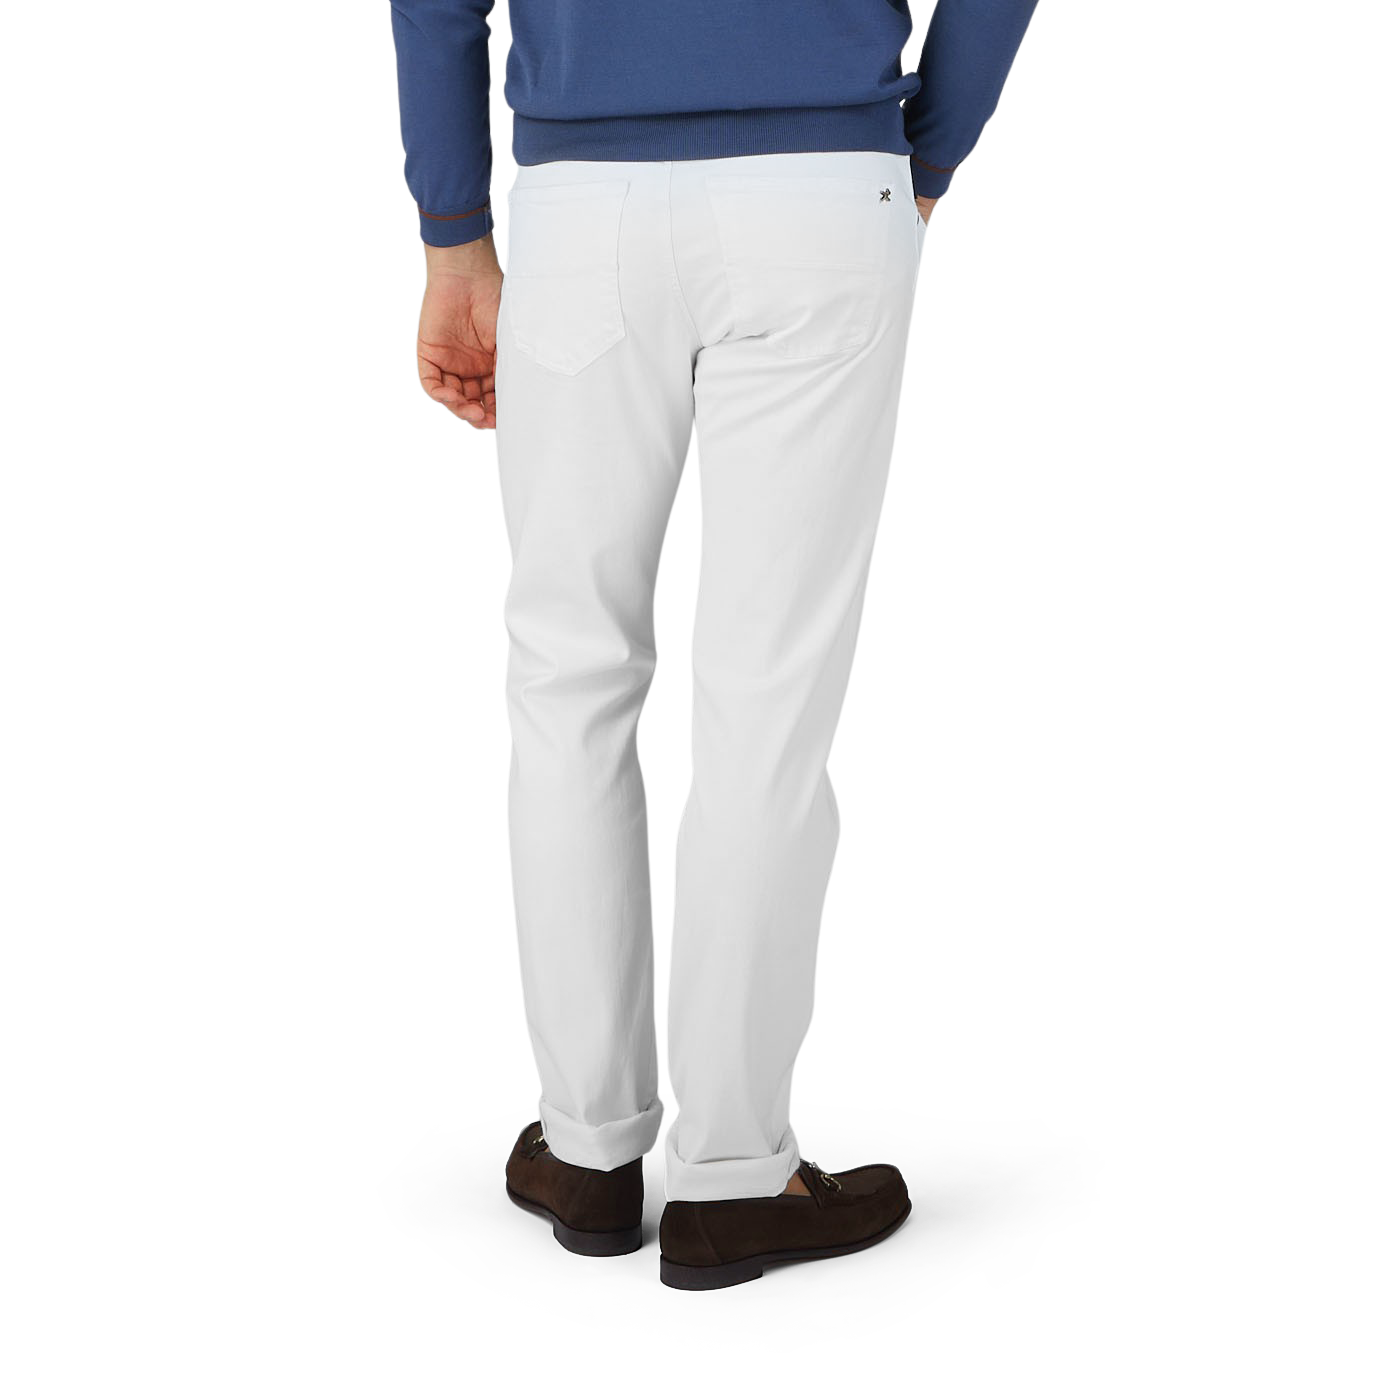 A man in White Super Stretch Michelangelo Jeans and a blue sweater by Tramarossa.